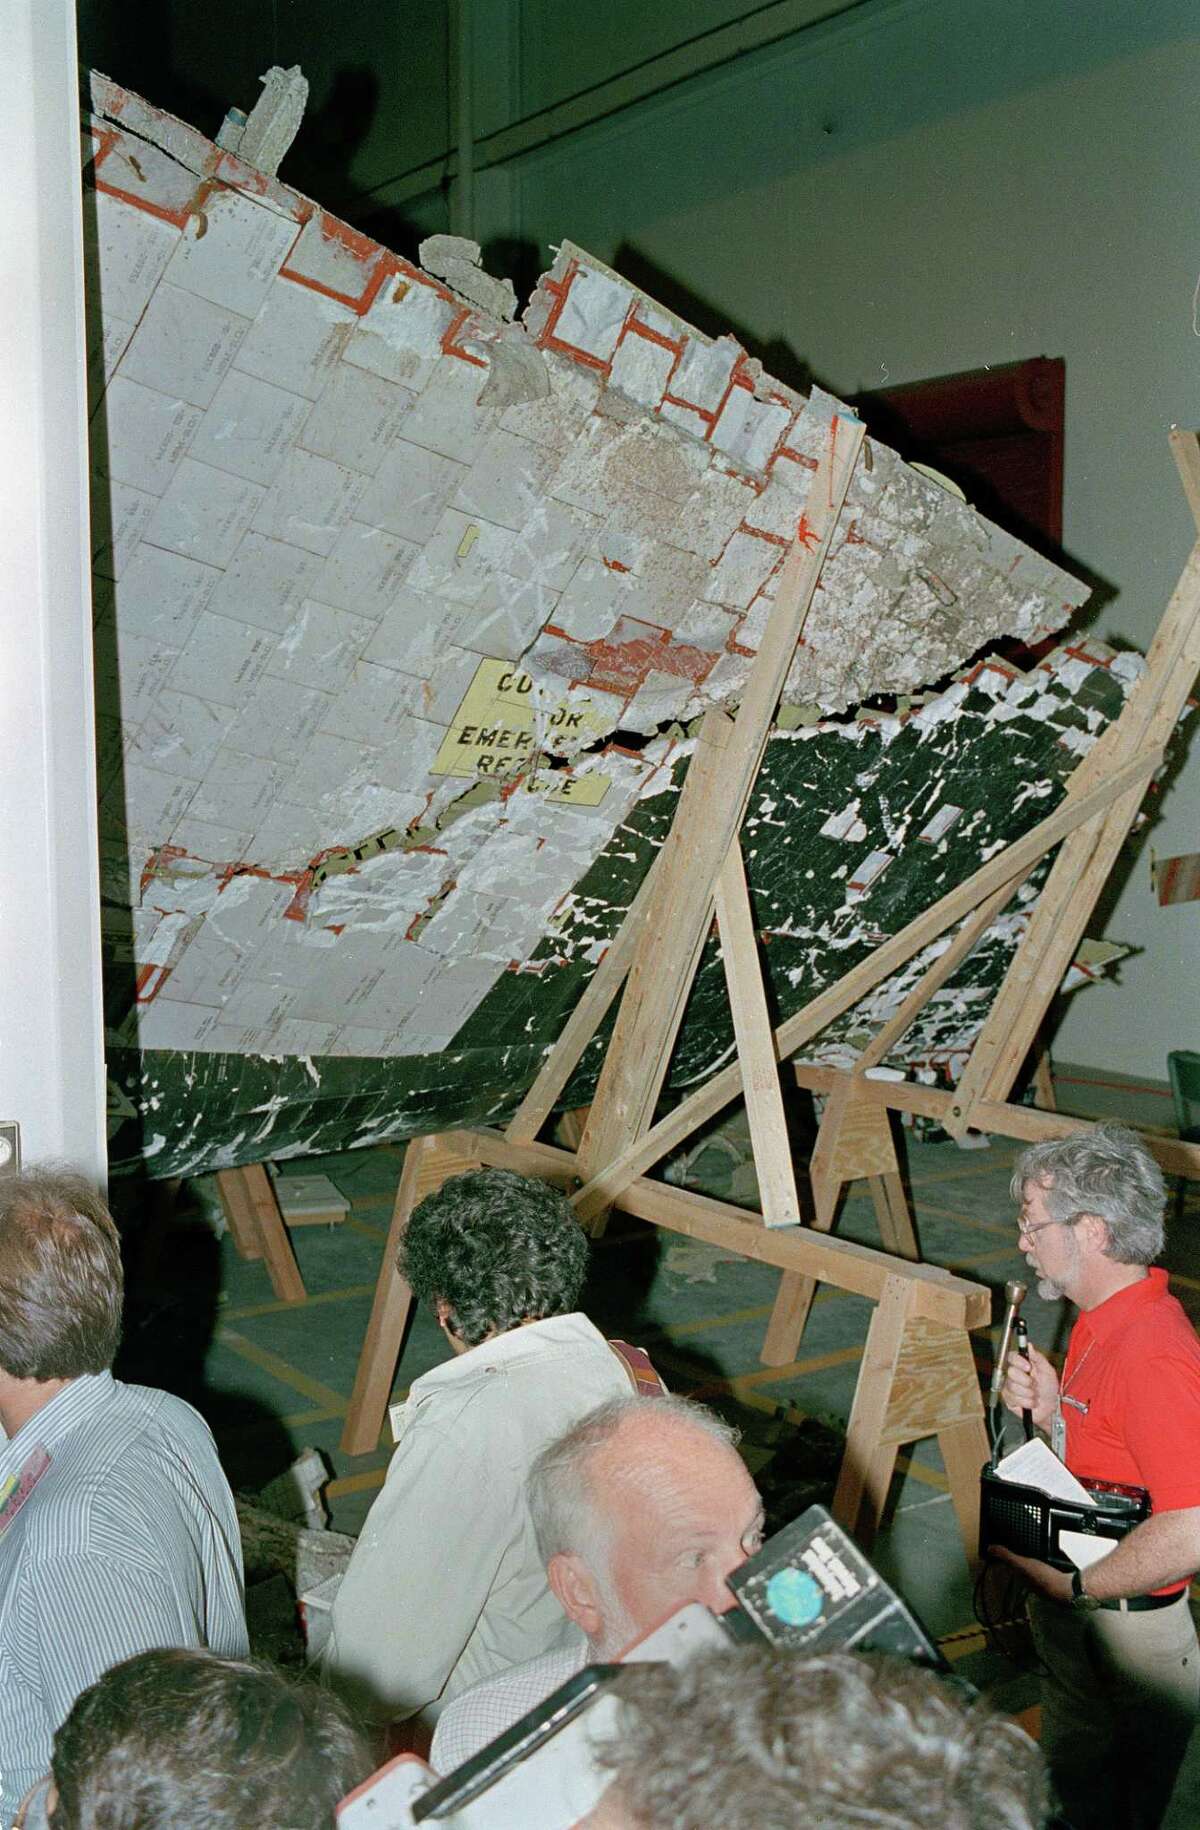 space shuttle challenger wreckage